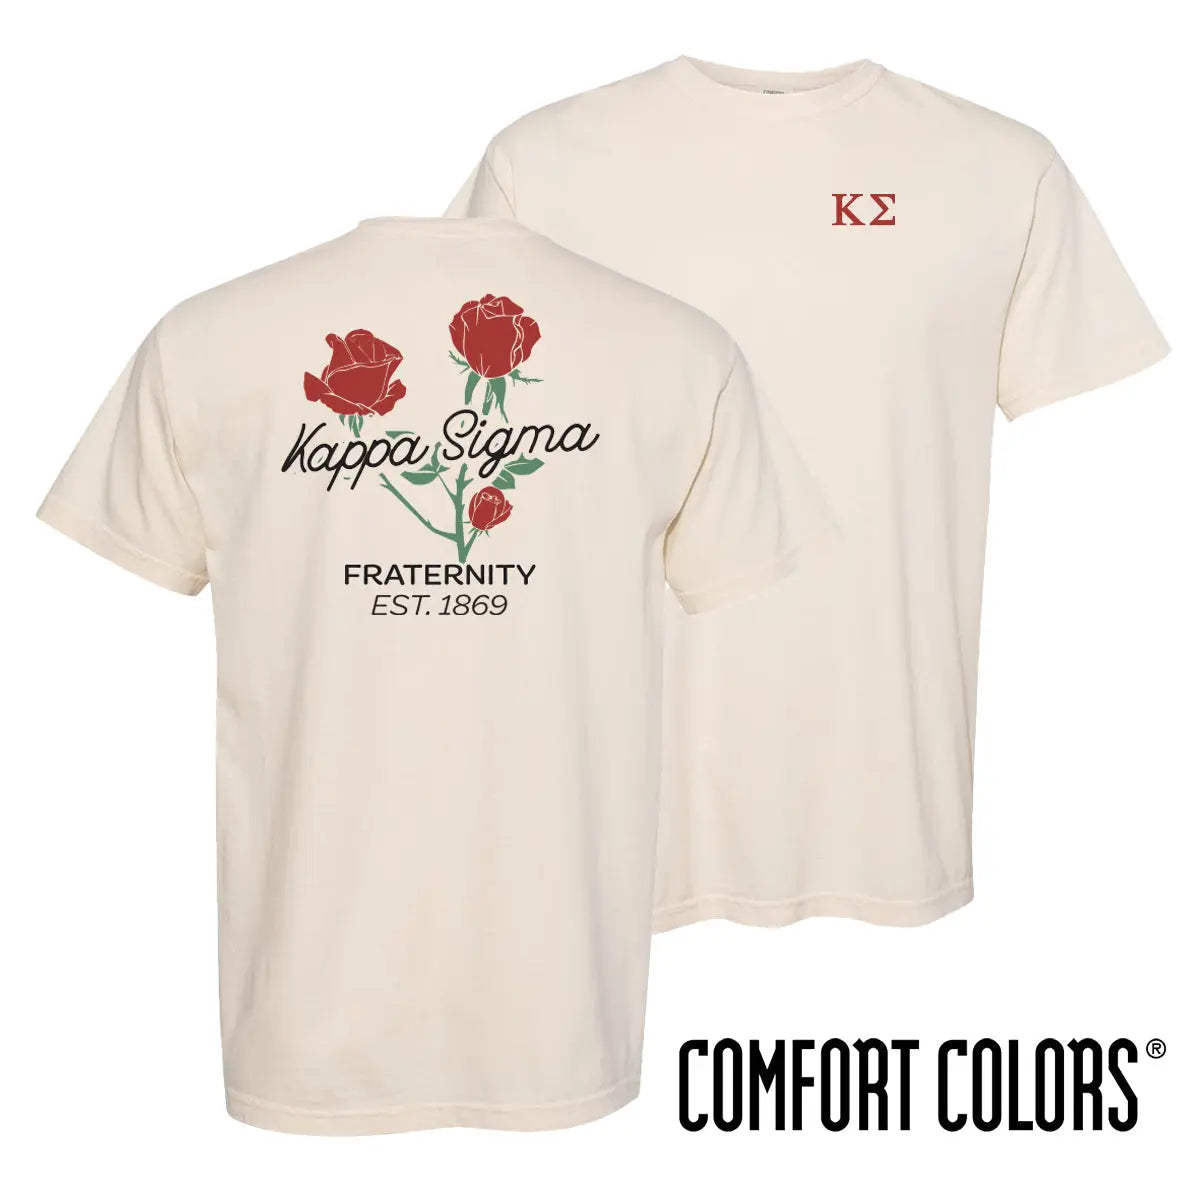 Kappa Sig Comfort Colors Rosebud Ivory Short Sleeve Tee - Kappa Sigma Official Store